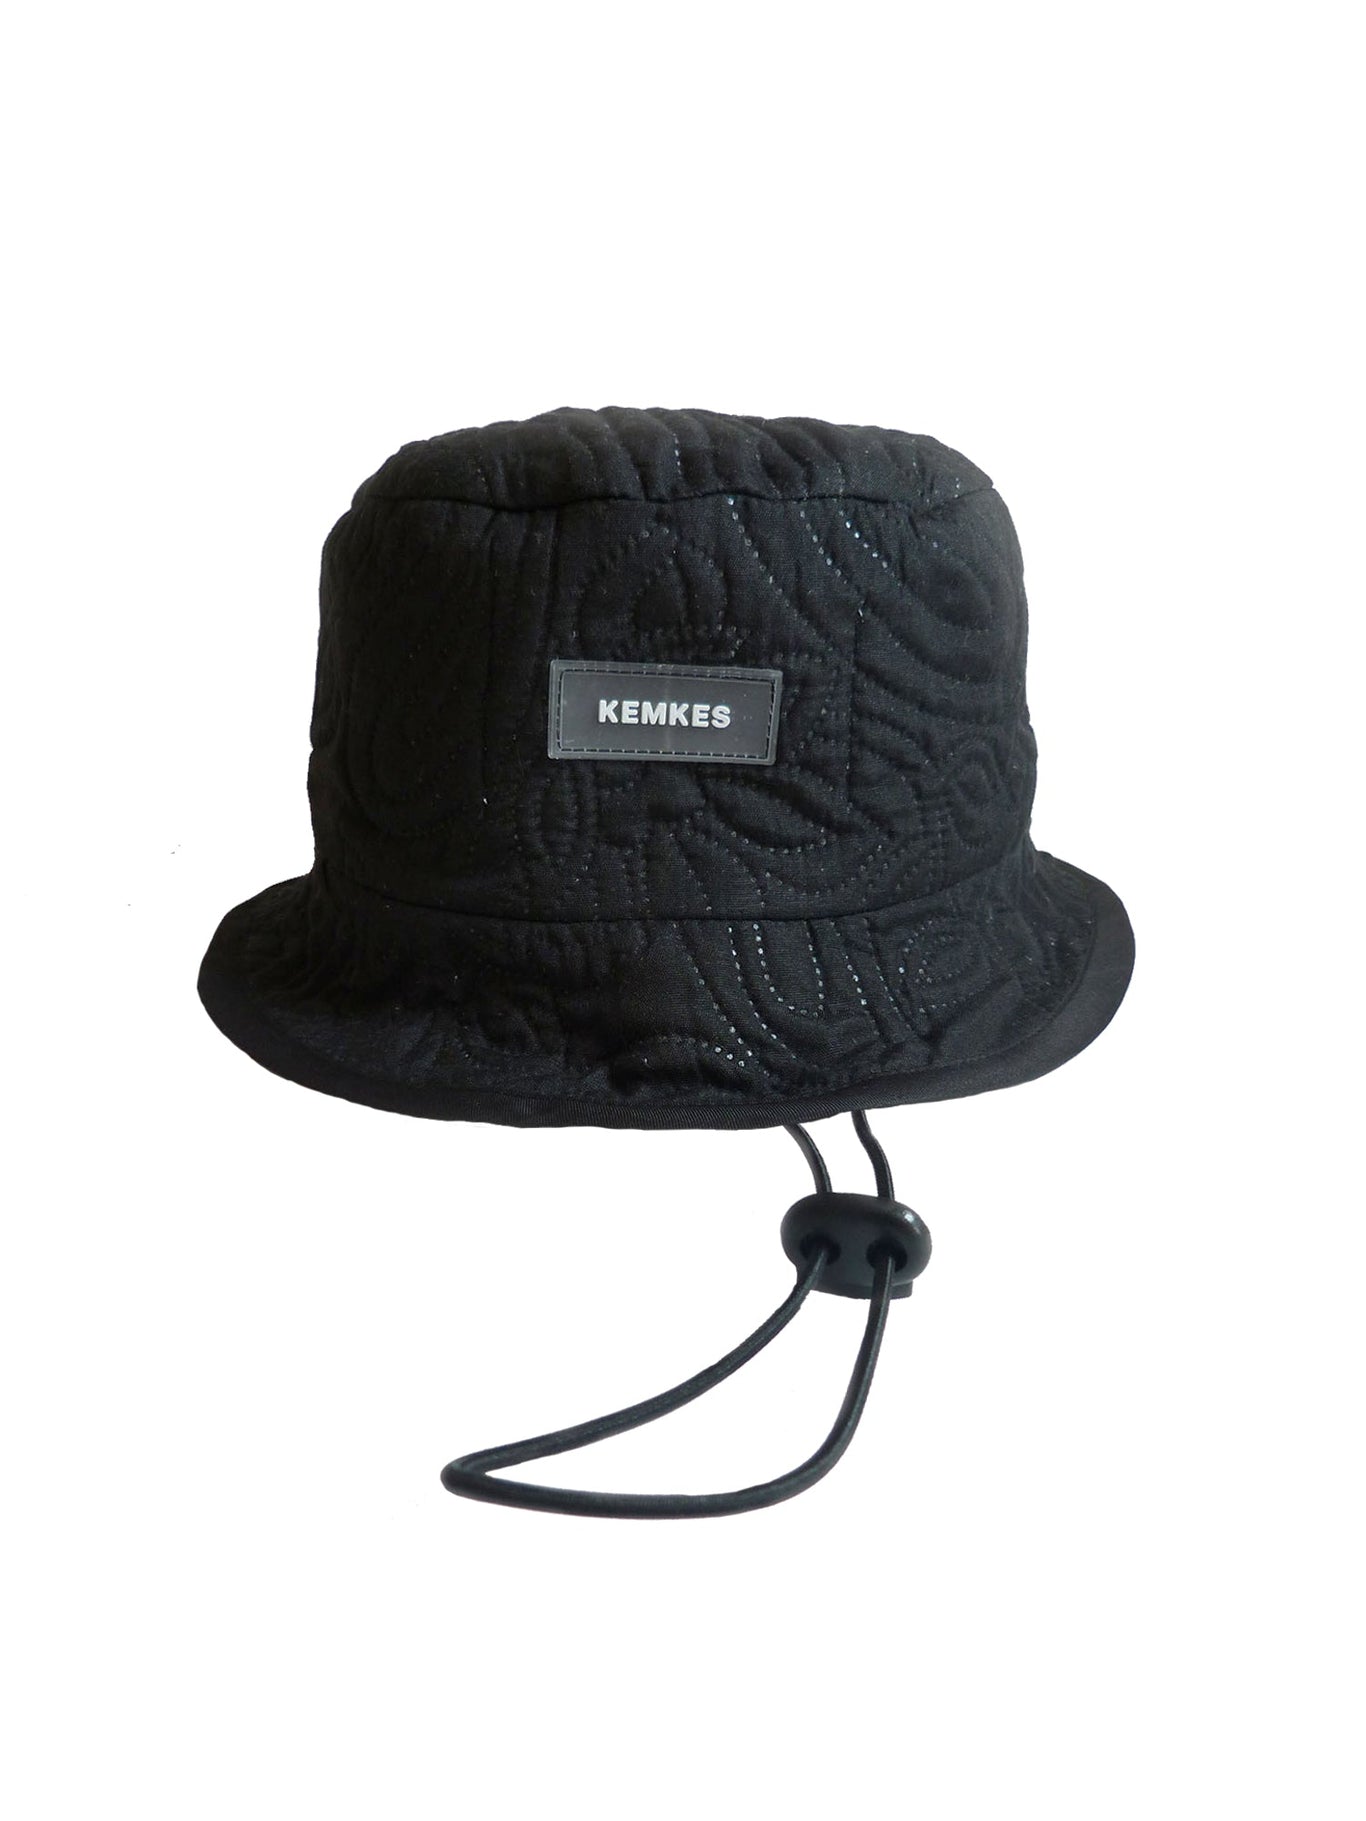 Kemkes Black Quilt Bucket Hat